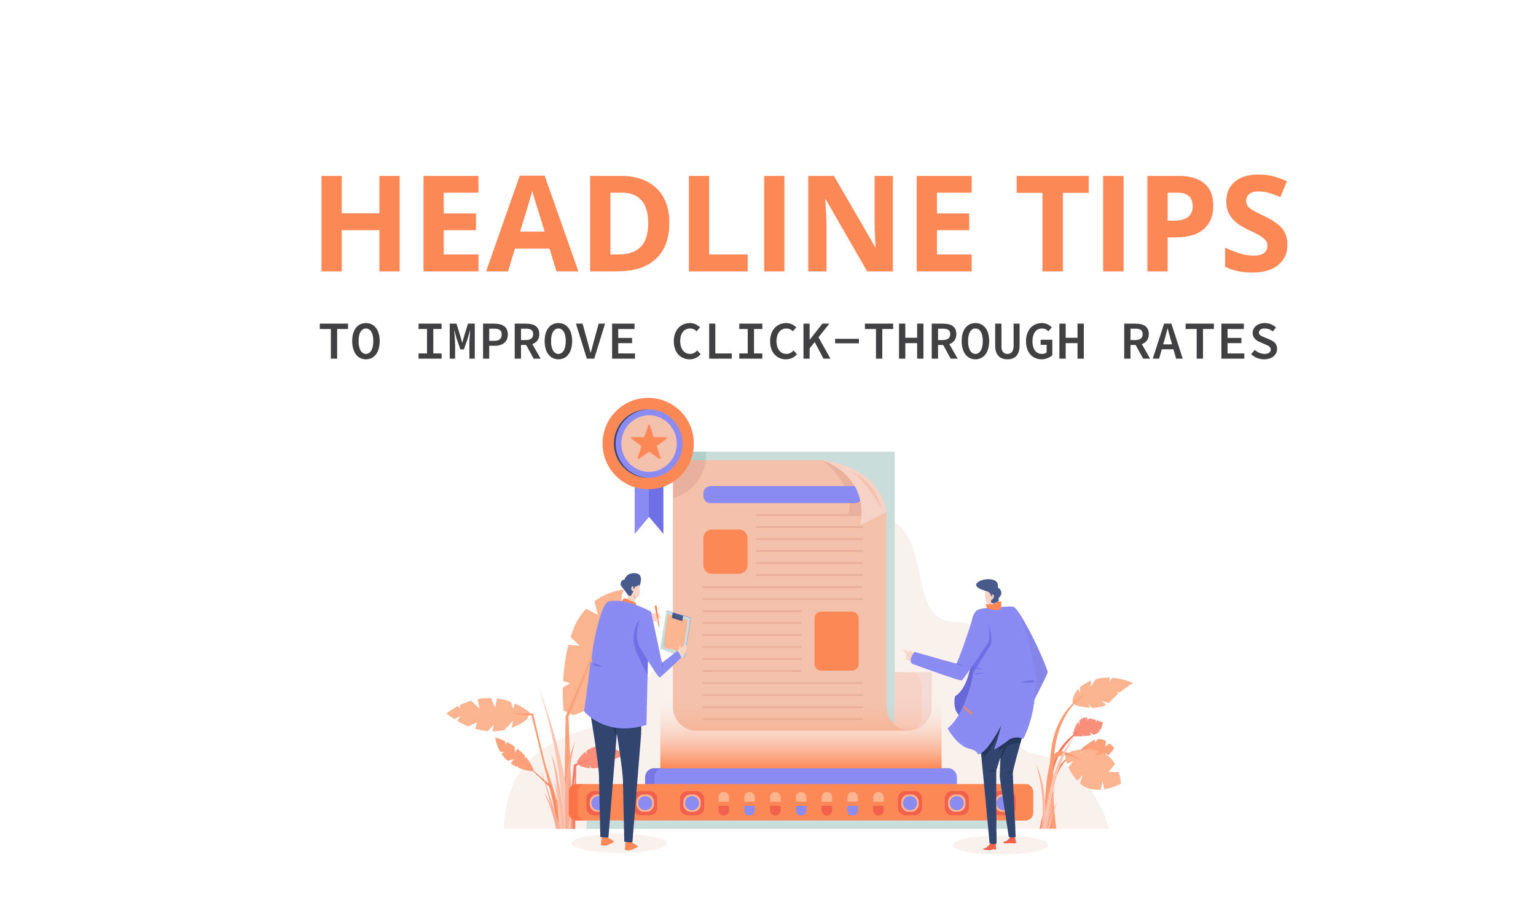 Headline tips guaranteed to improve click-through rates